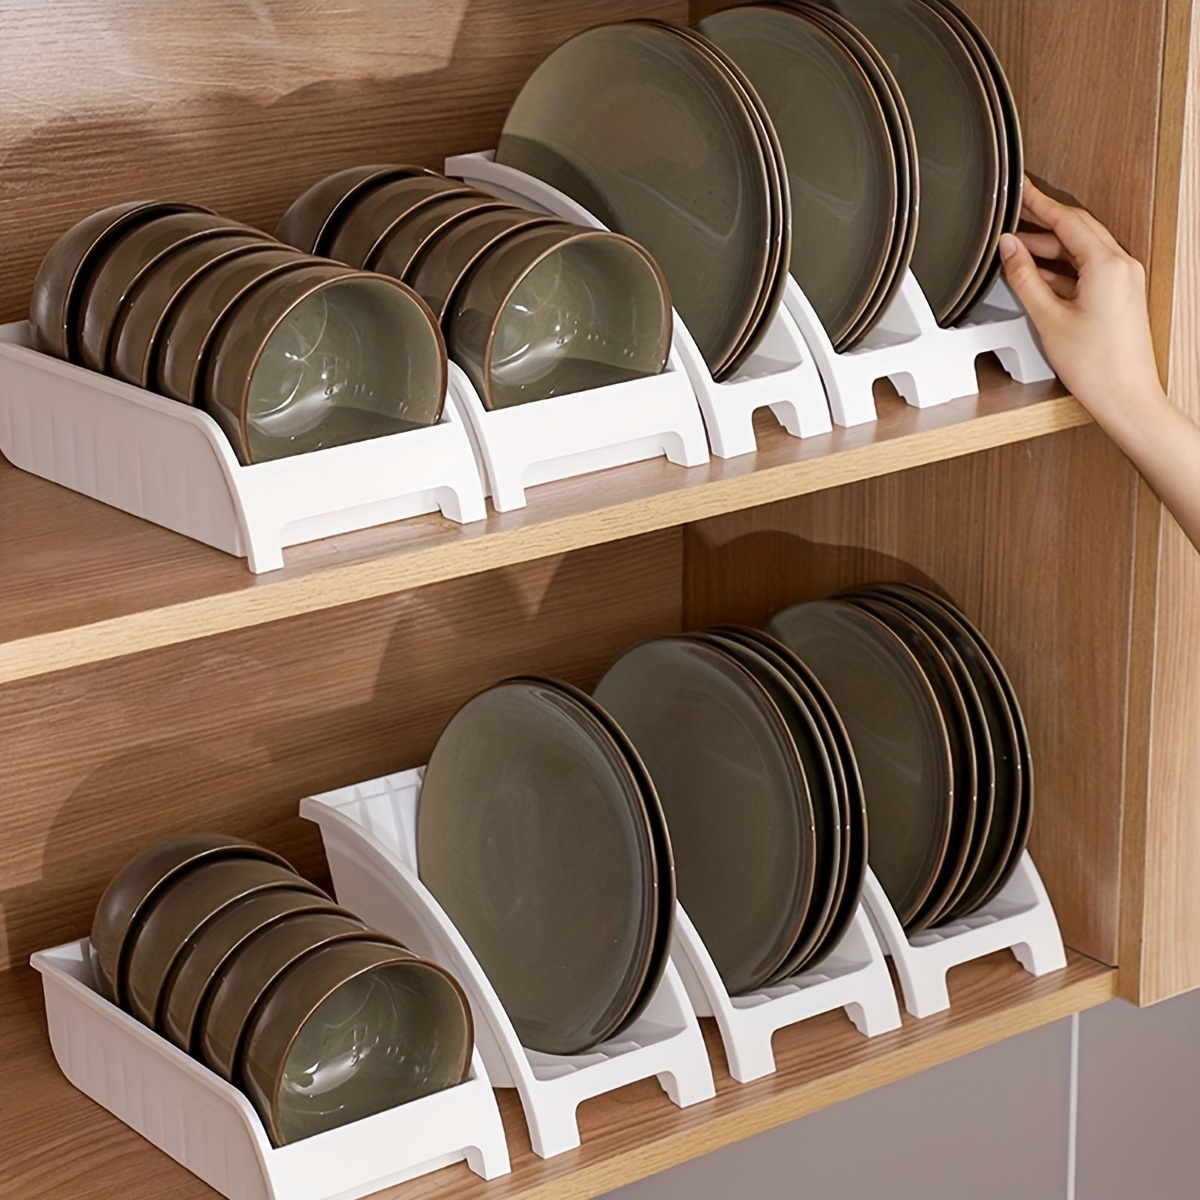 Storage Dish Rack,Wall Mounted Pan Rack,Space-Saving Spice Shelves Holder  For Kitchen, Kitchen Storage Shelf For Utensils, Easy Assembly Racks (Color